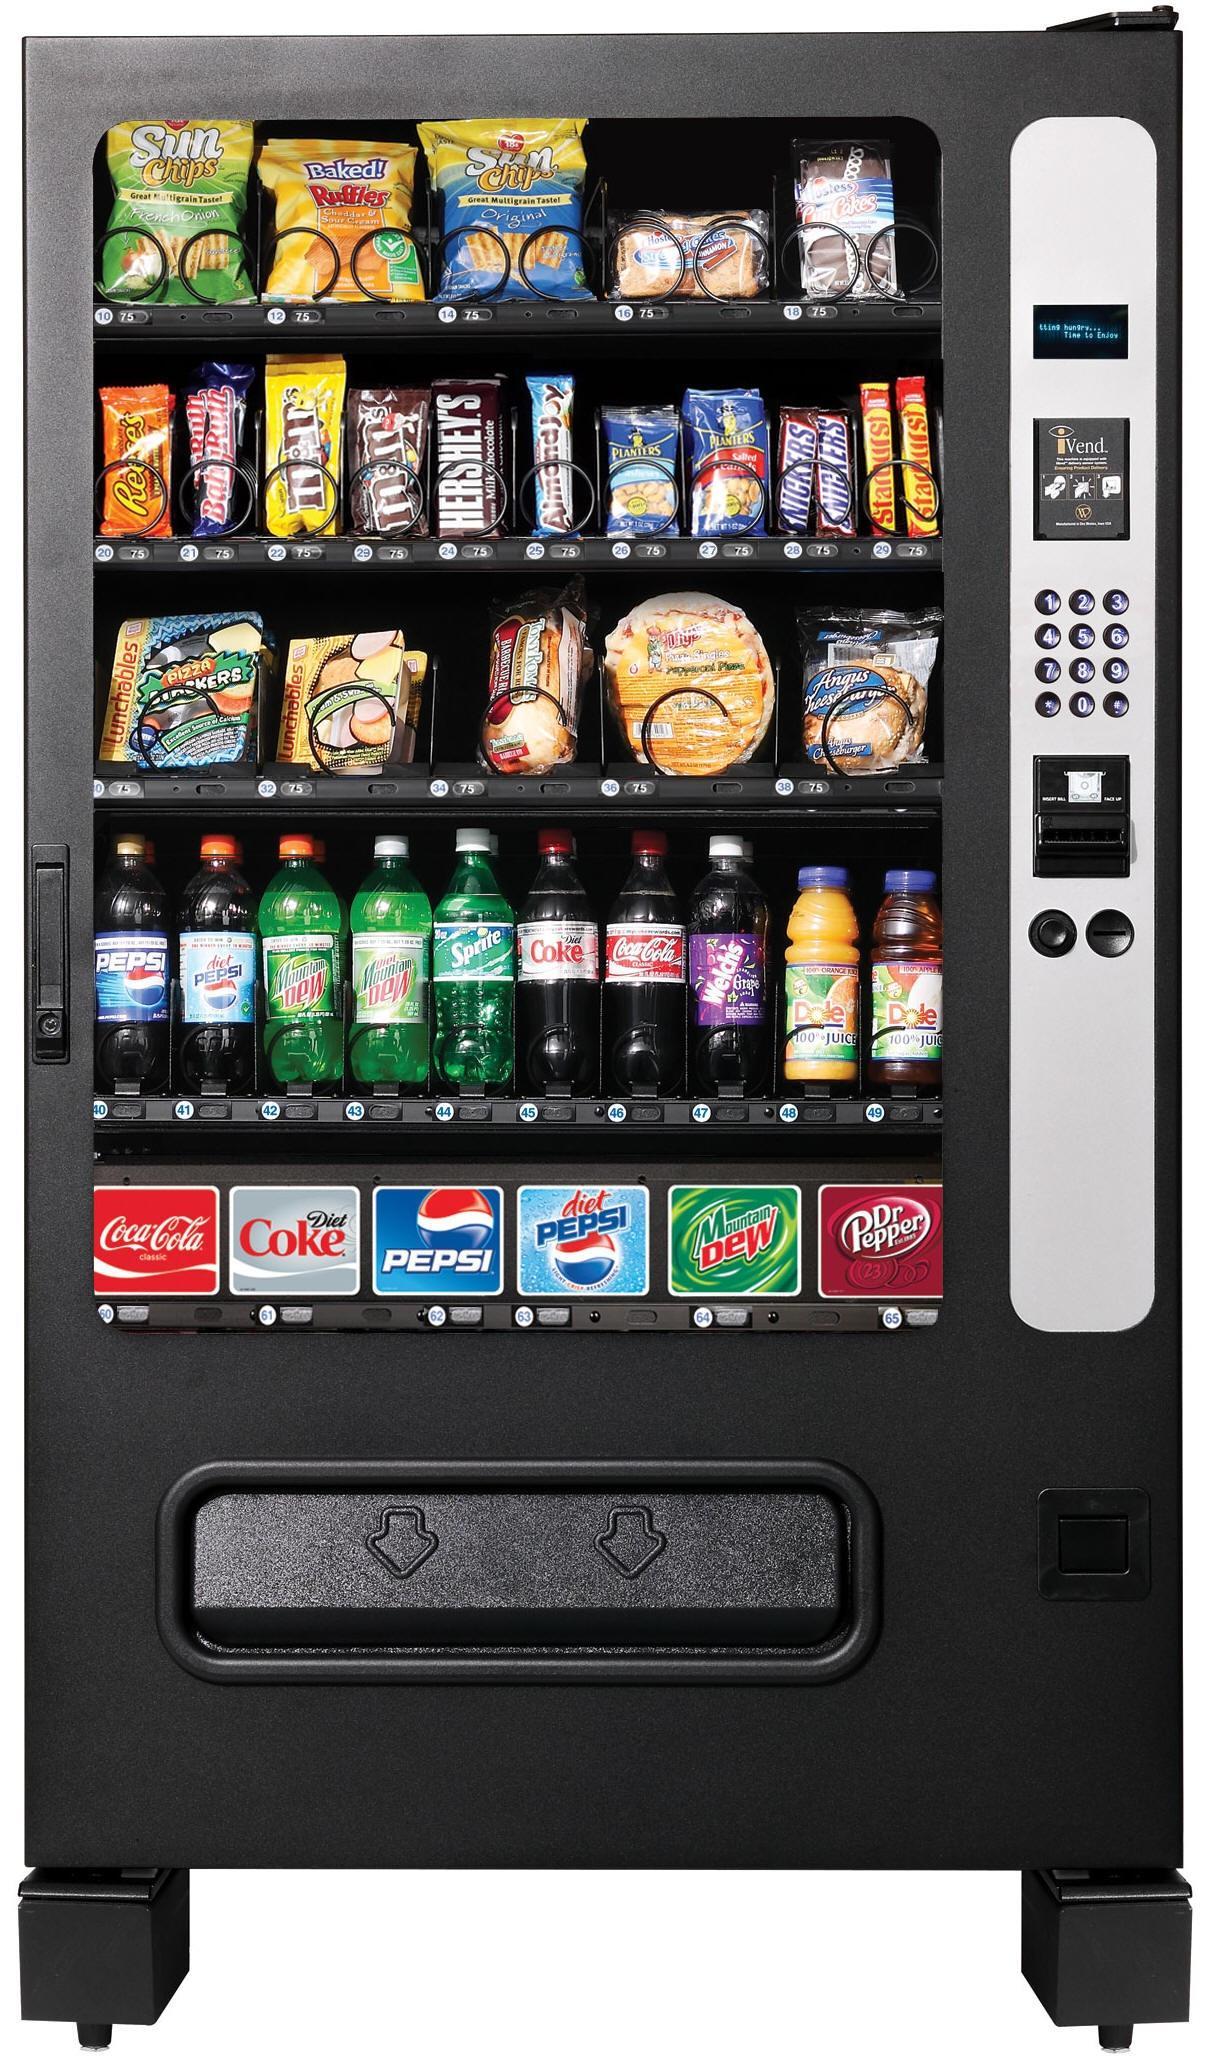 Vending Machines Snack Sodapop For Android Apk Download - coca cola vending machine roblox